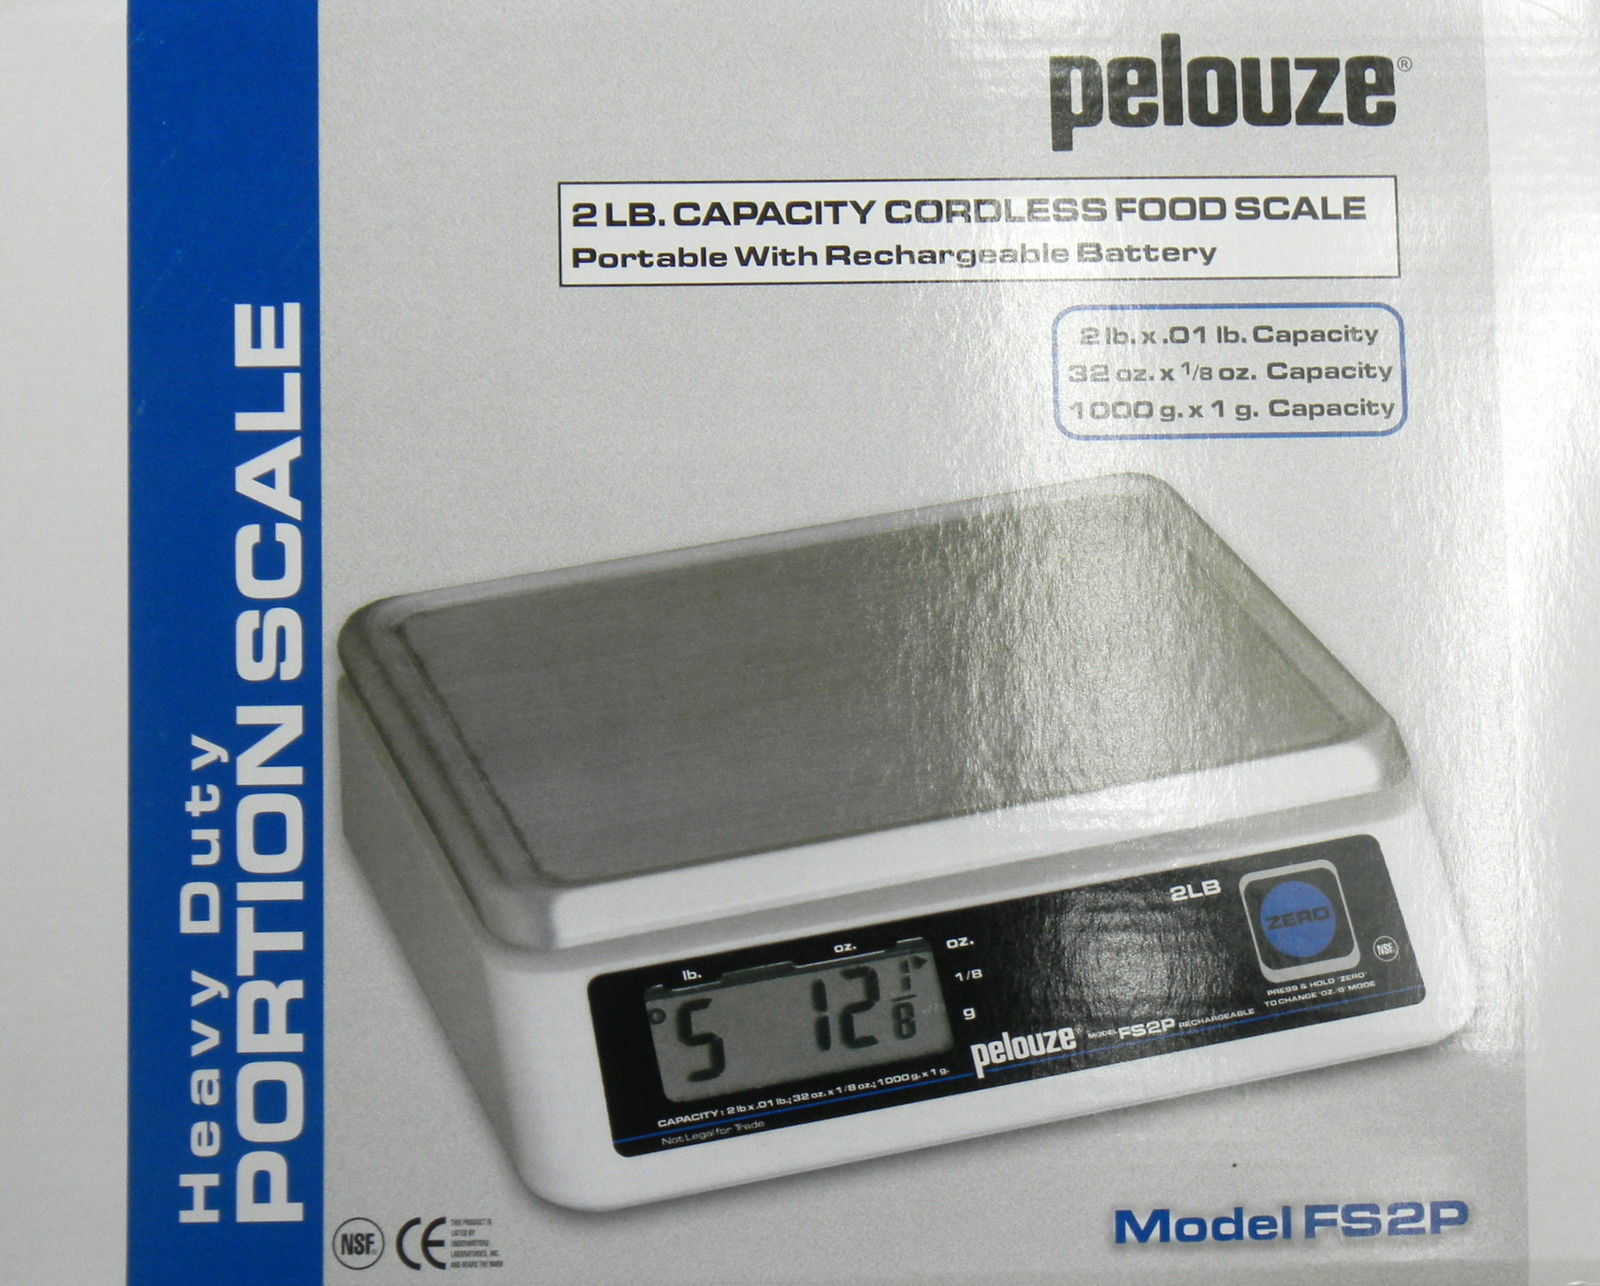 Rubbermaid Pelouze FS2P 2lb. Digital Portion Food Scale